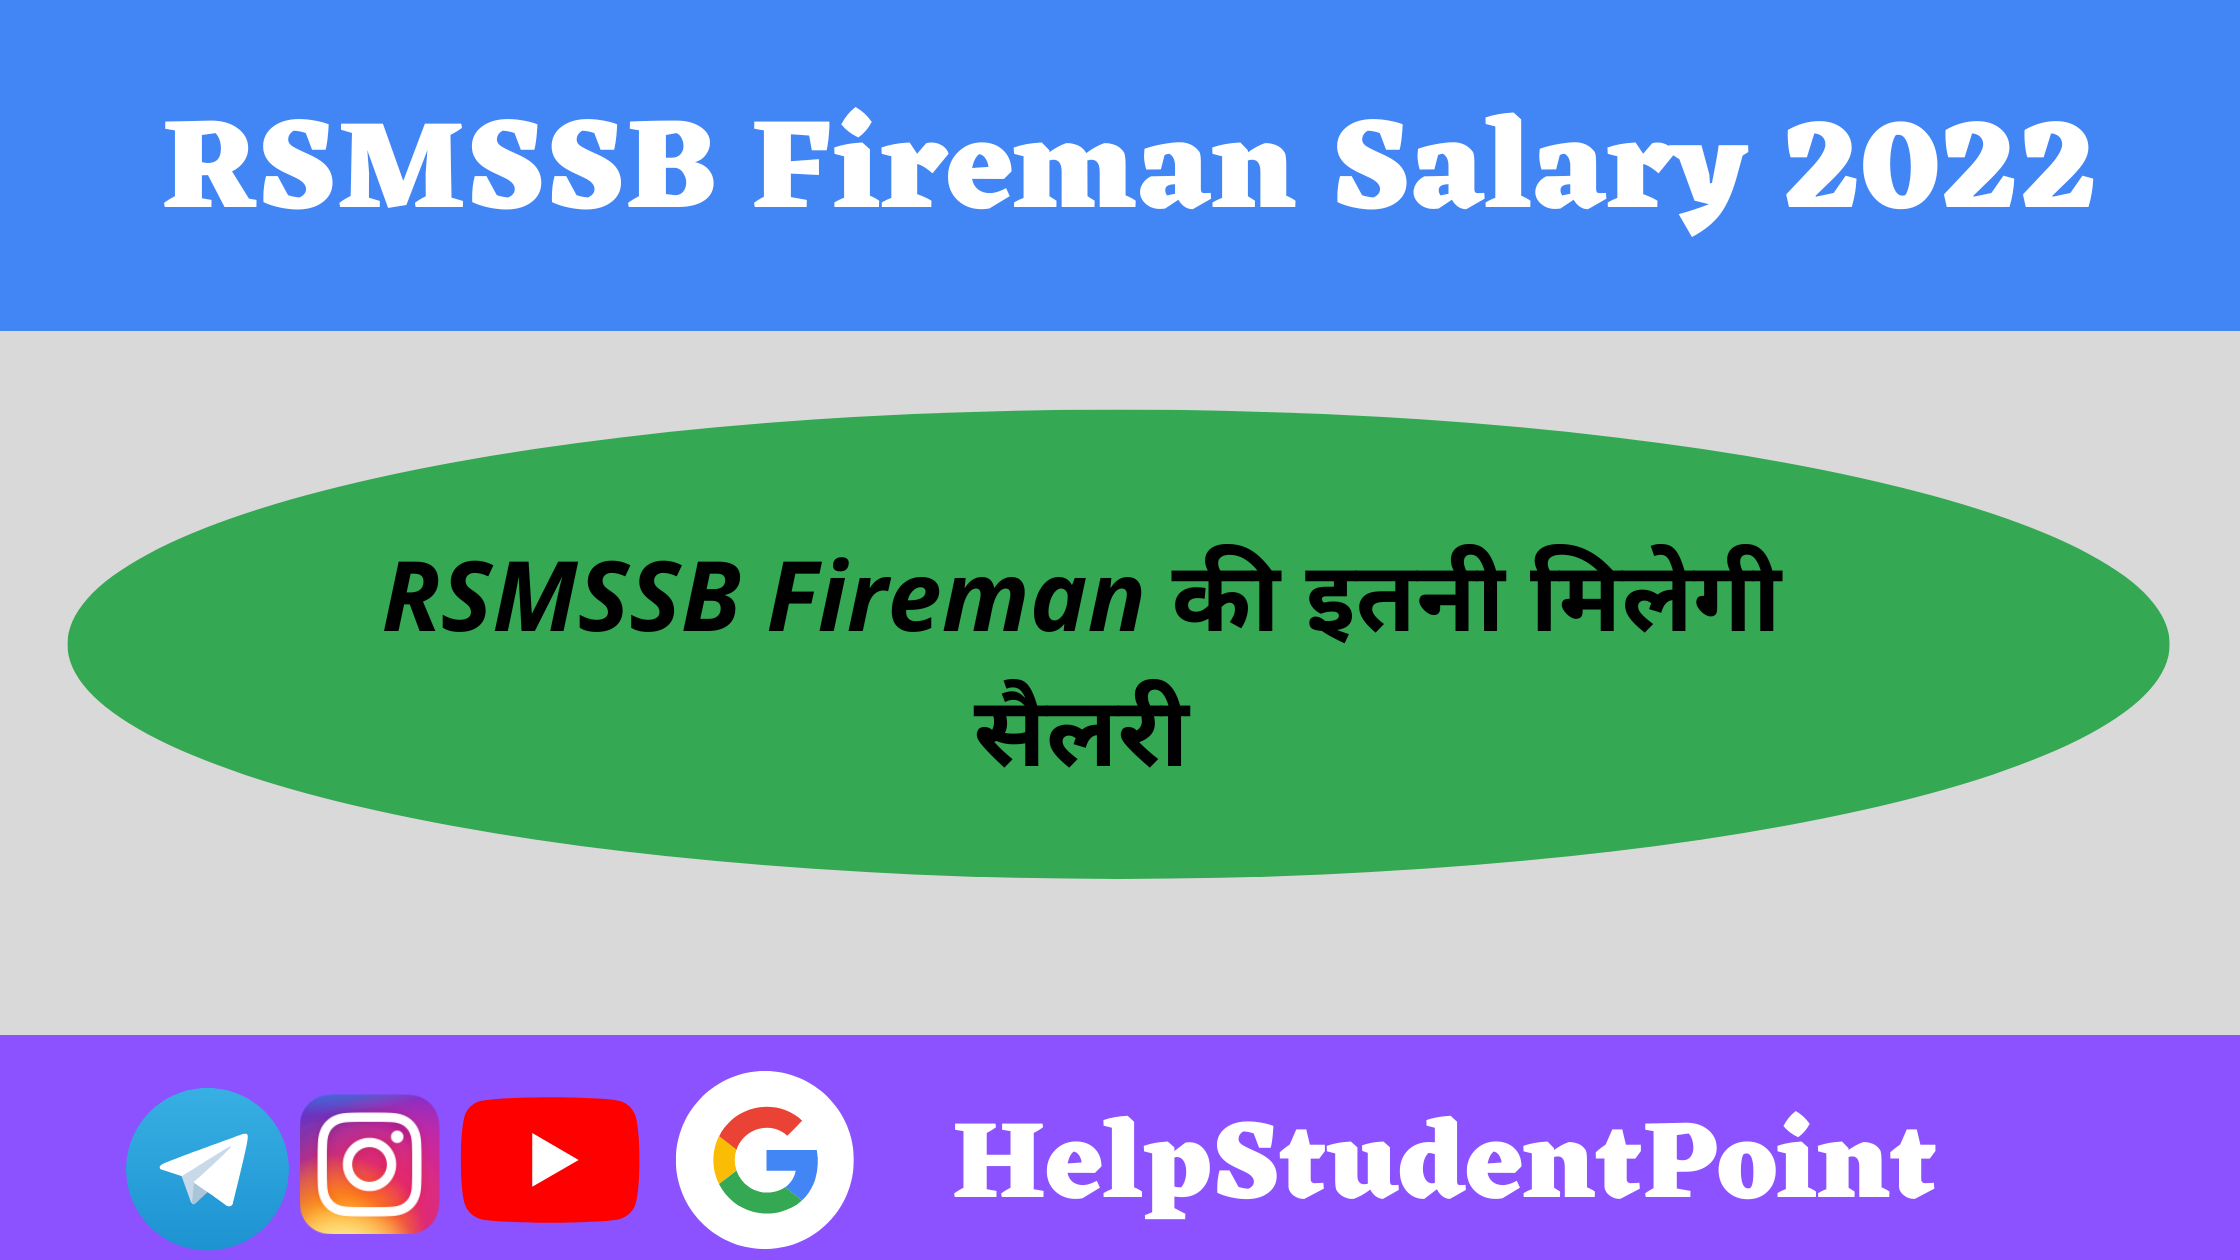 RSMSSB Fireman salary